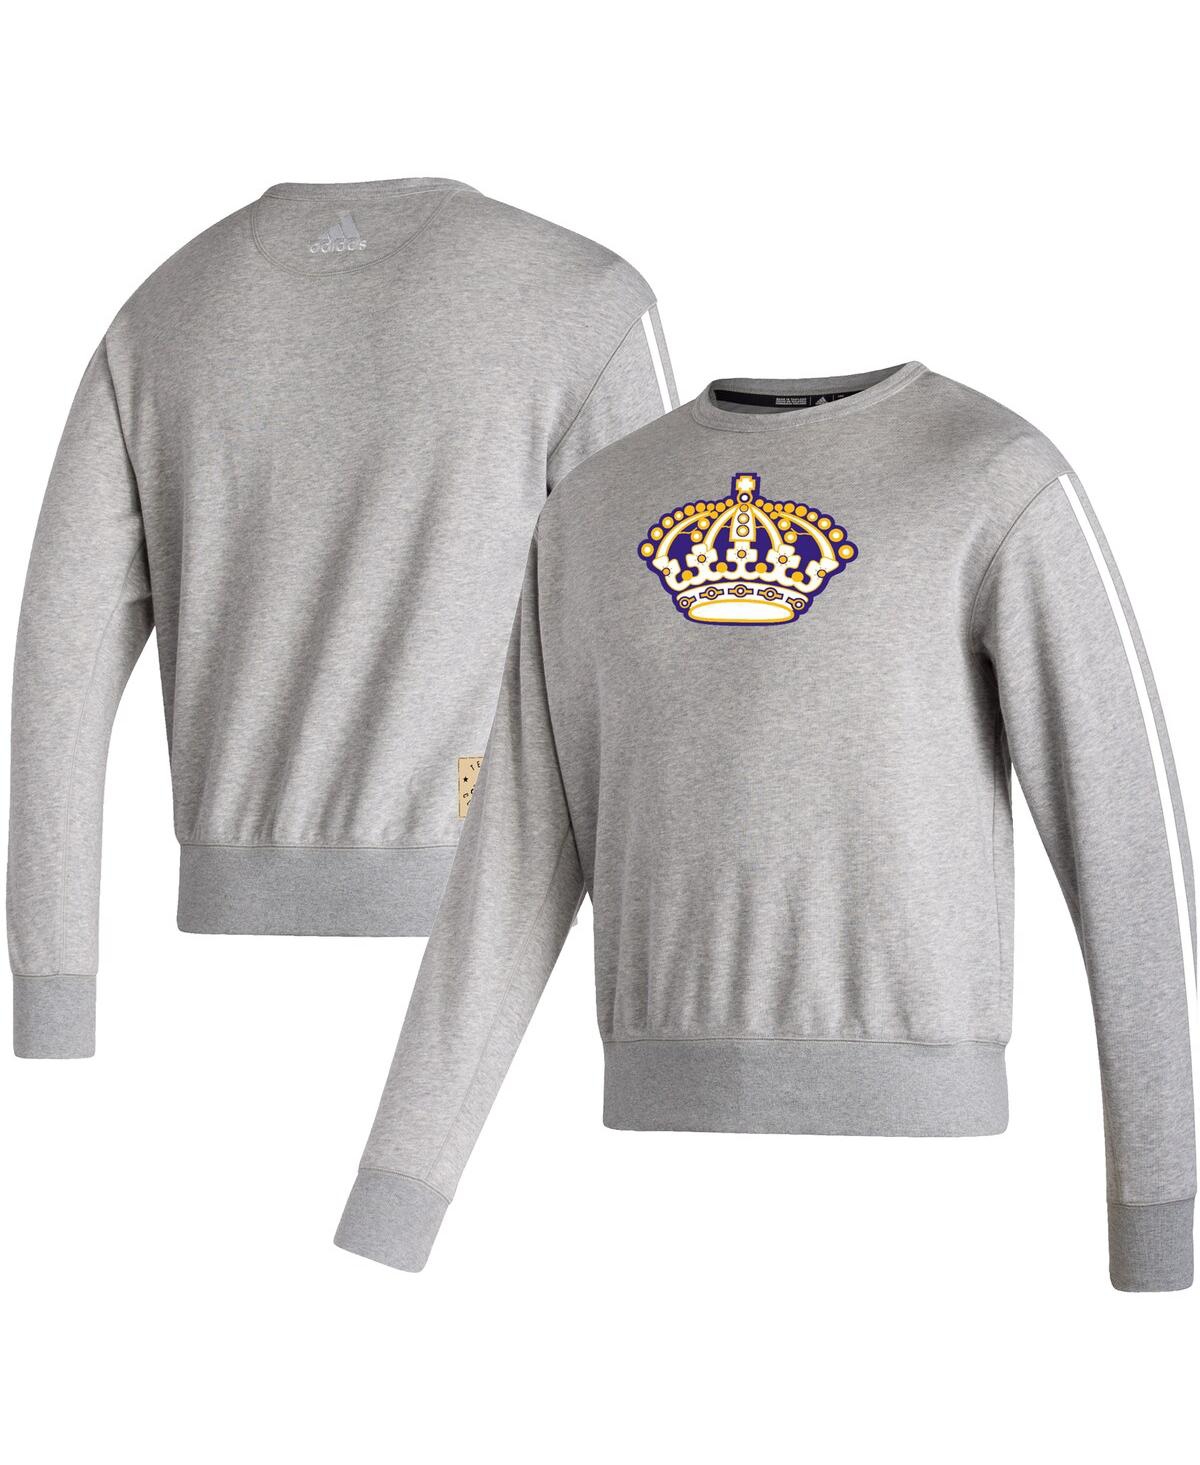 Shop Adidas Originals Men's Adidas Heathered Gray Los Angeles Kings Team Classics Vintage-like Pullover Sweatshirt